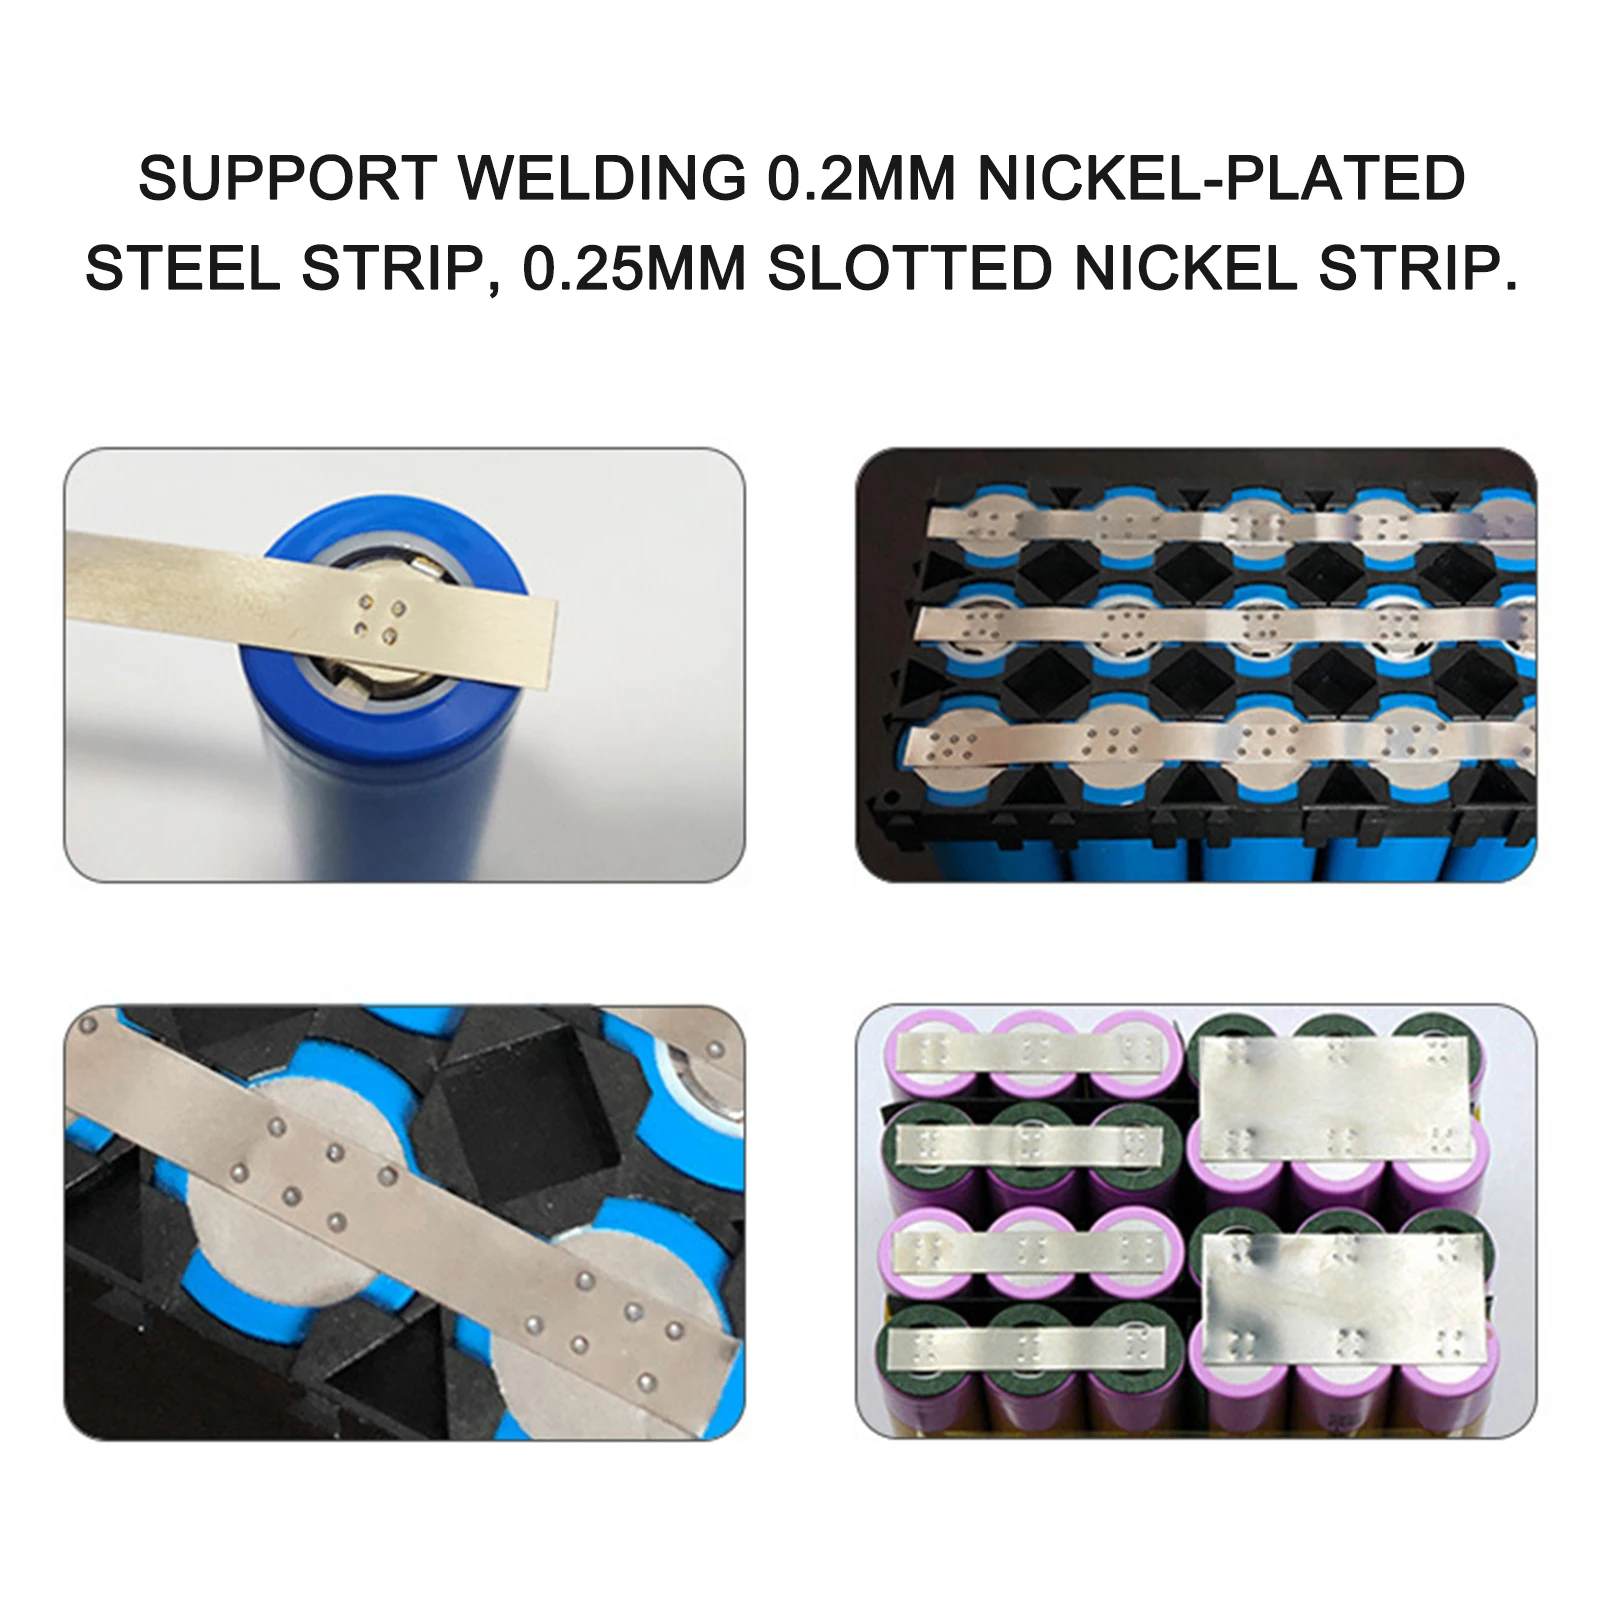 Digital Display Mini Diy Spot Welder Kit Portable Spot Welding Machine Weld Tools For 0.2mm Nickel Plated 18650 Battery Pack enlarge